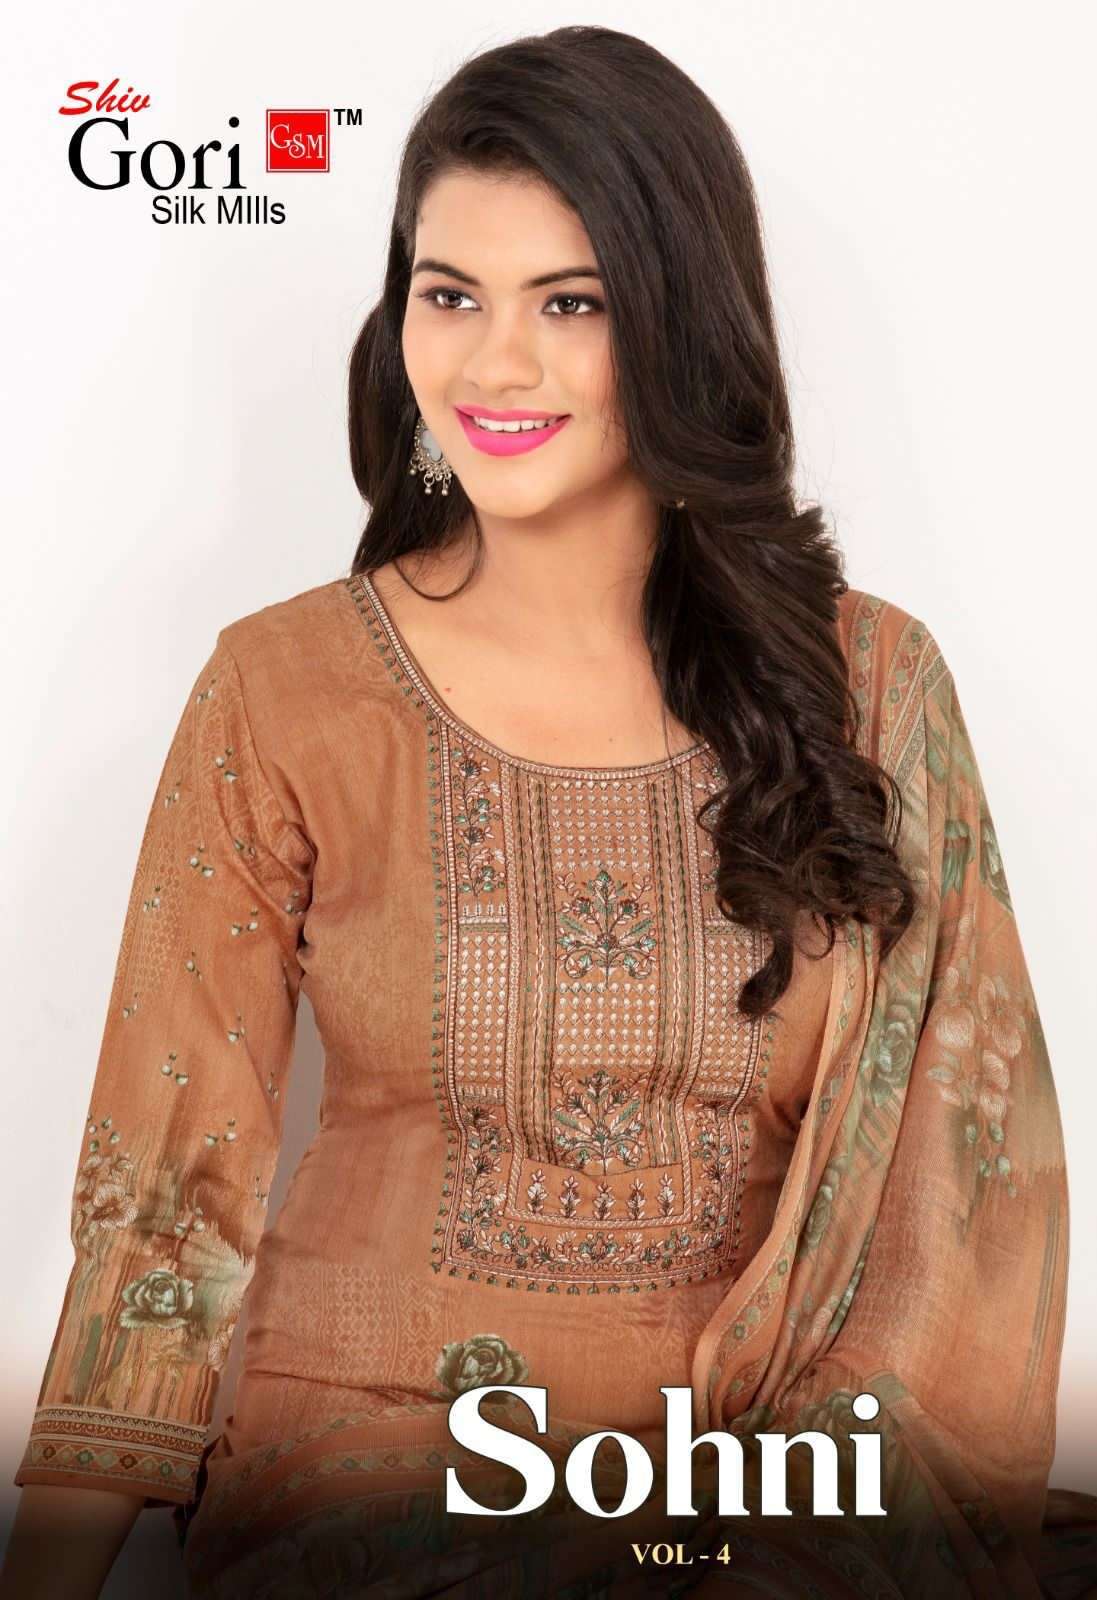 Shiv Gori Sohni Vol 4 Fancy Printed Cotton Unstitch Suit Online Sales Dealers In Surat